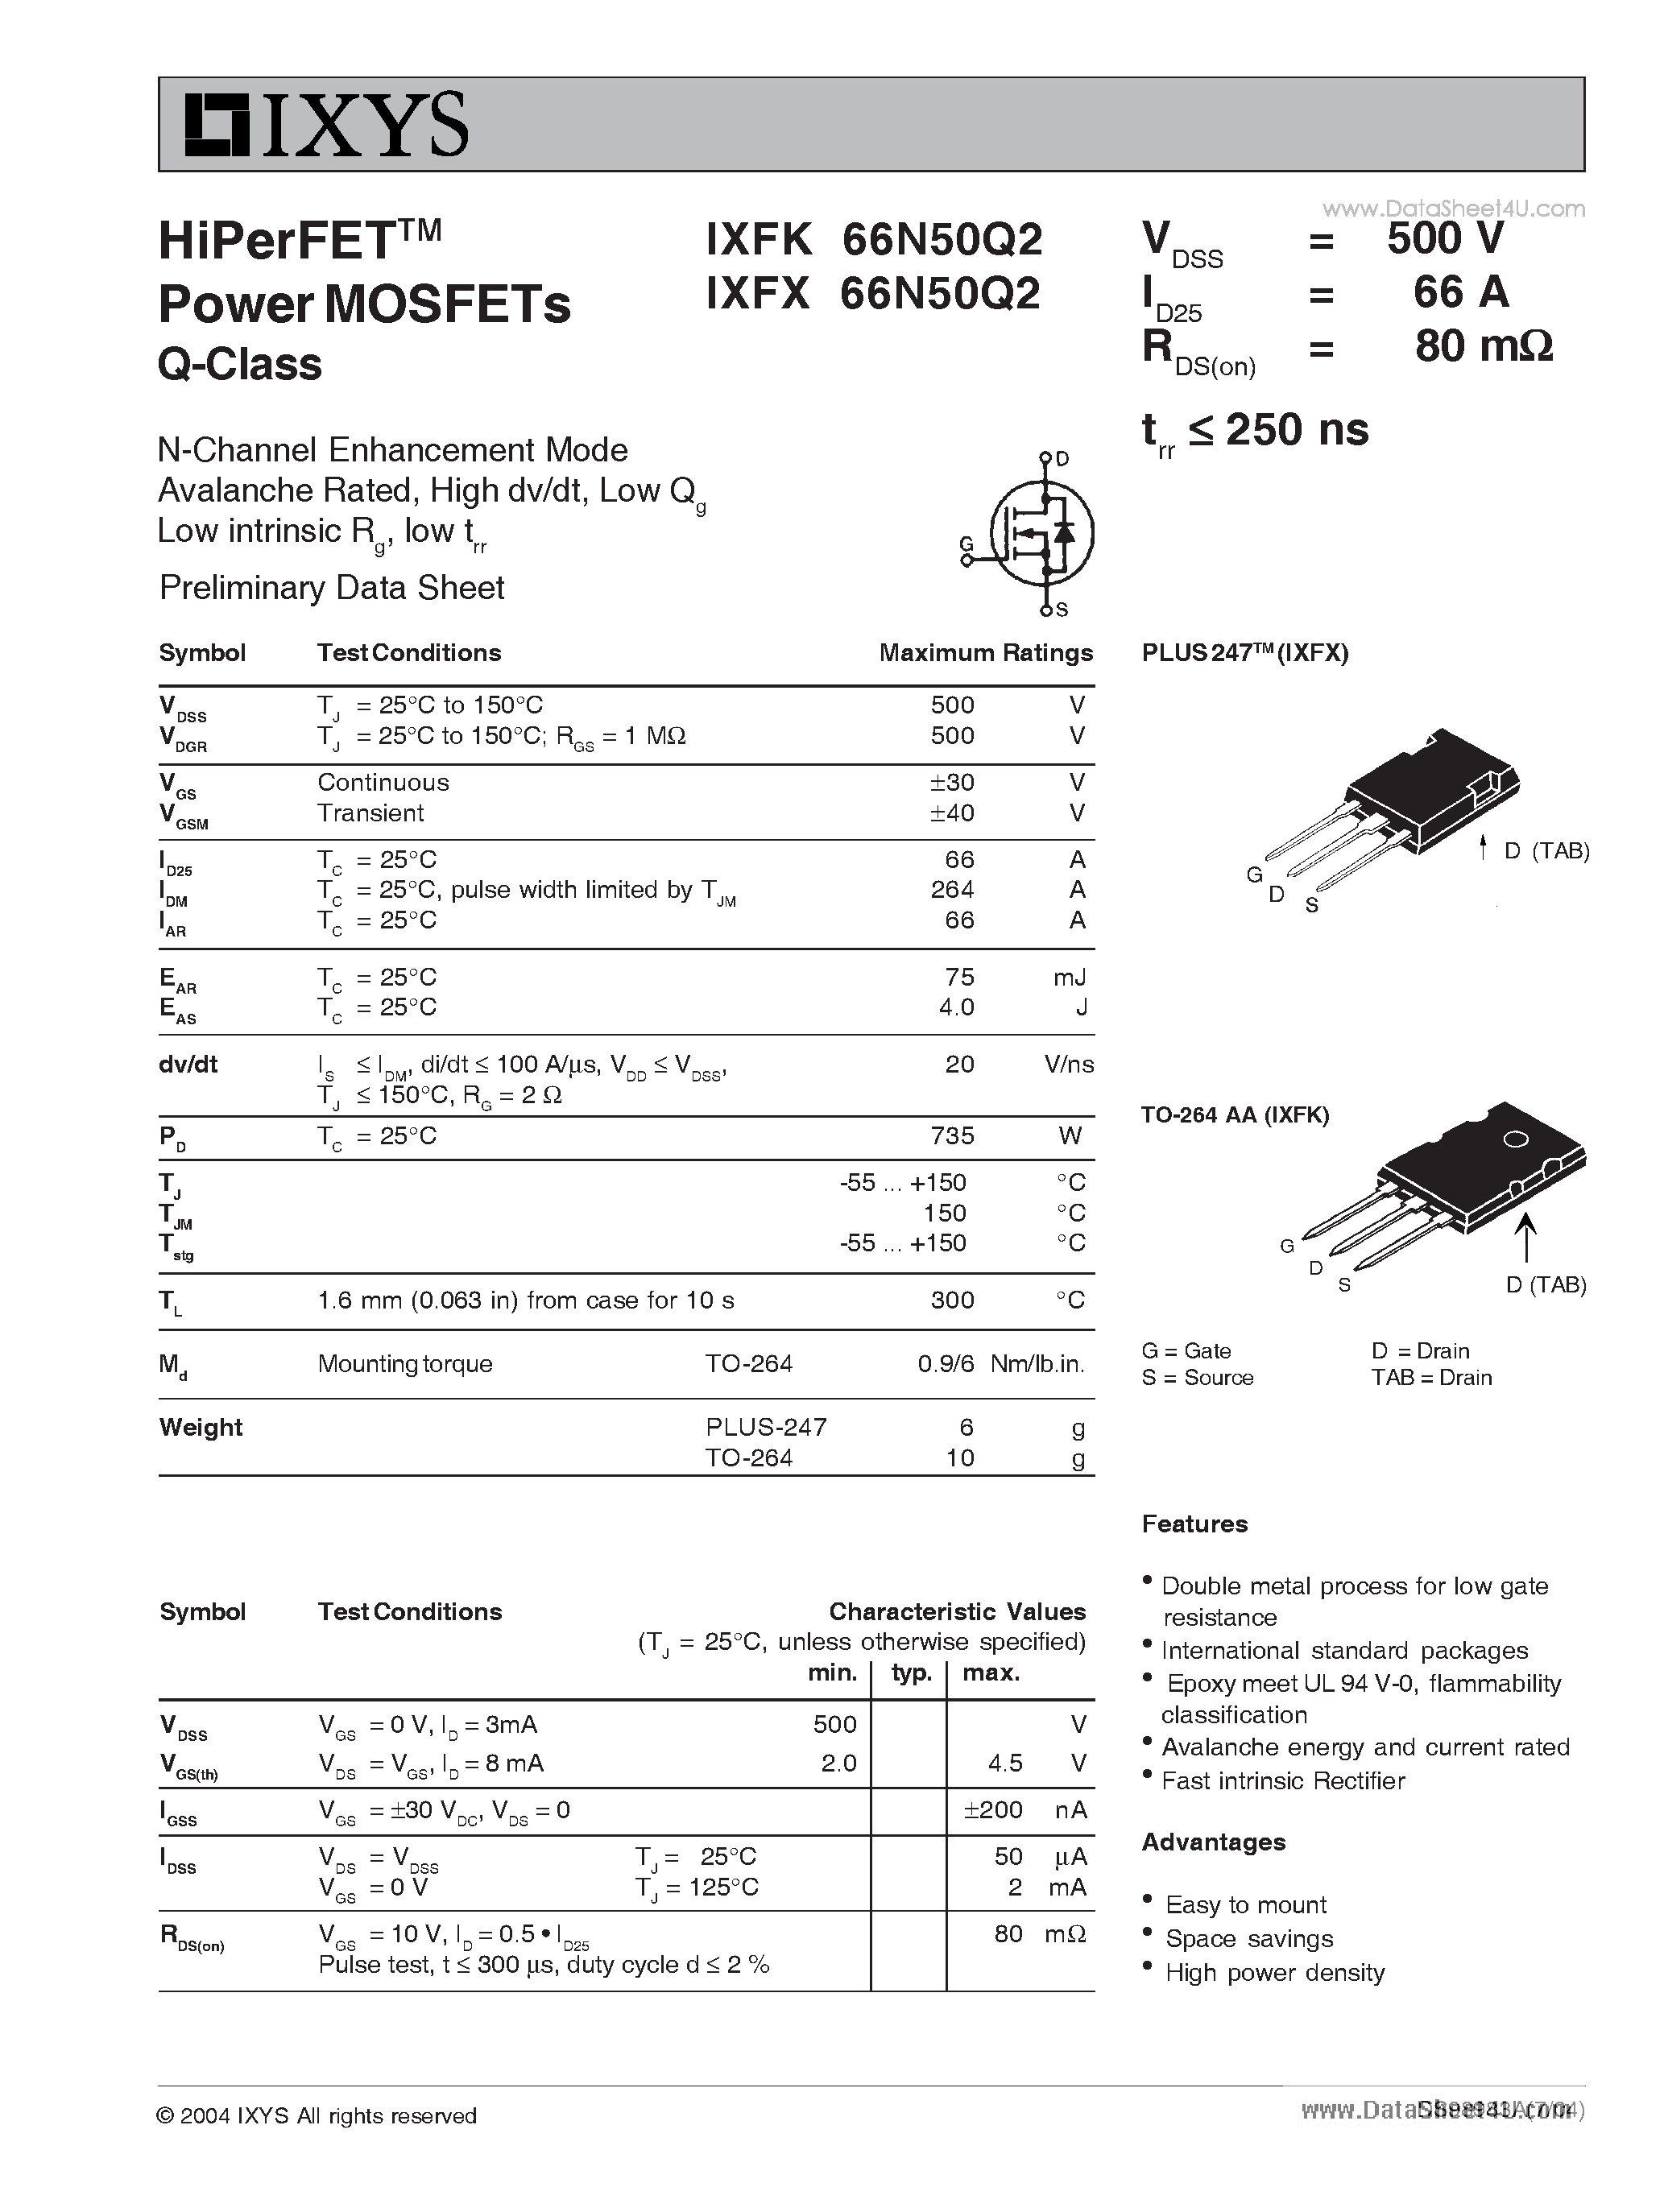 Datasheet IXFK66N50Q2 - HiPerFET Power MOSFETs Q-Class page 1